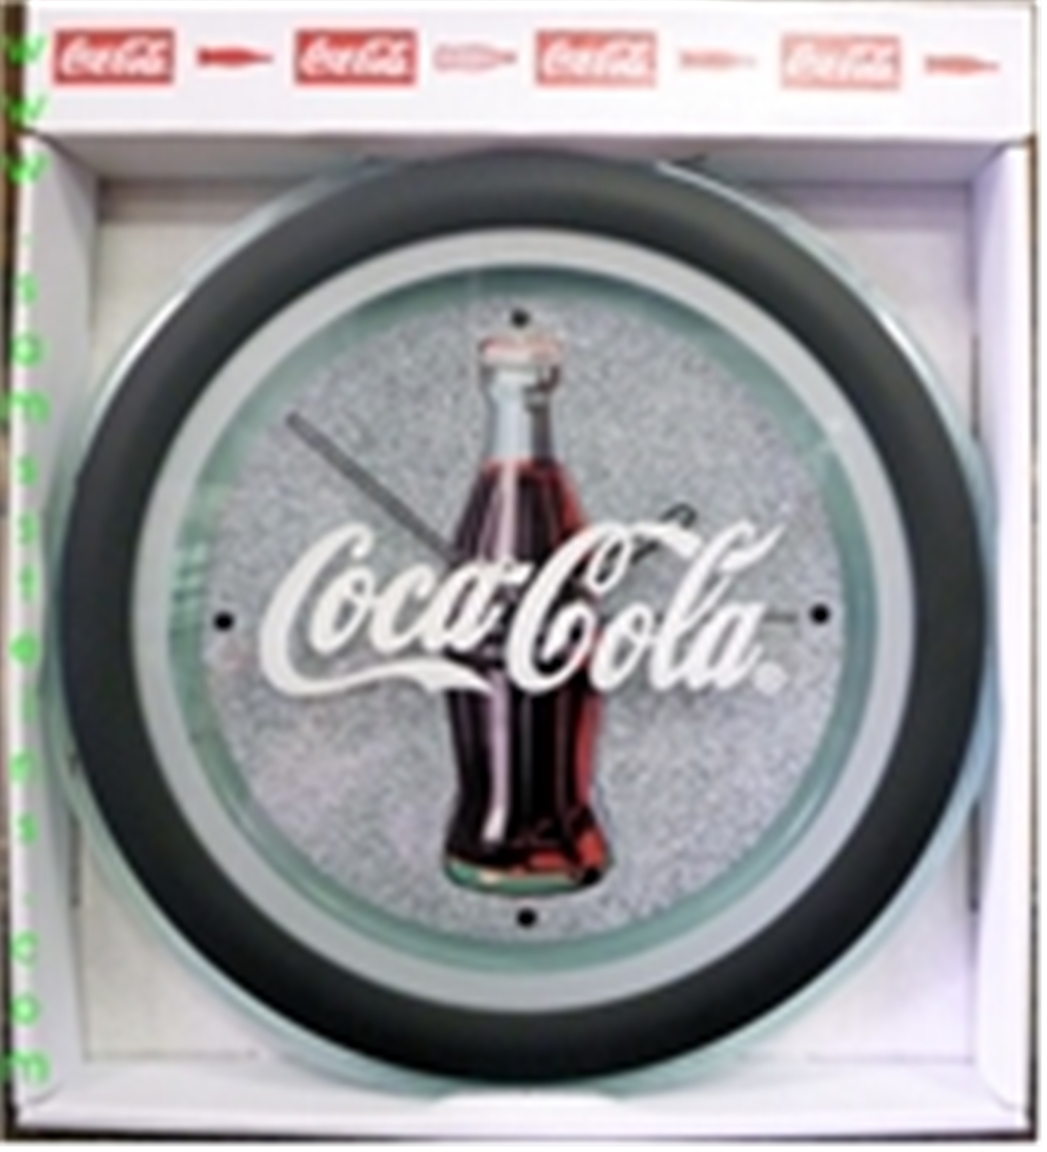 Coca Cola Granite Clock